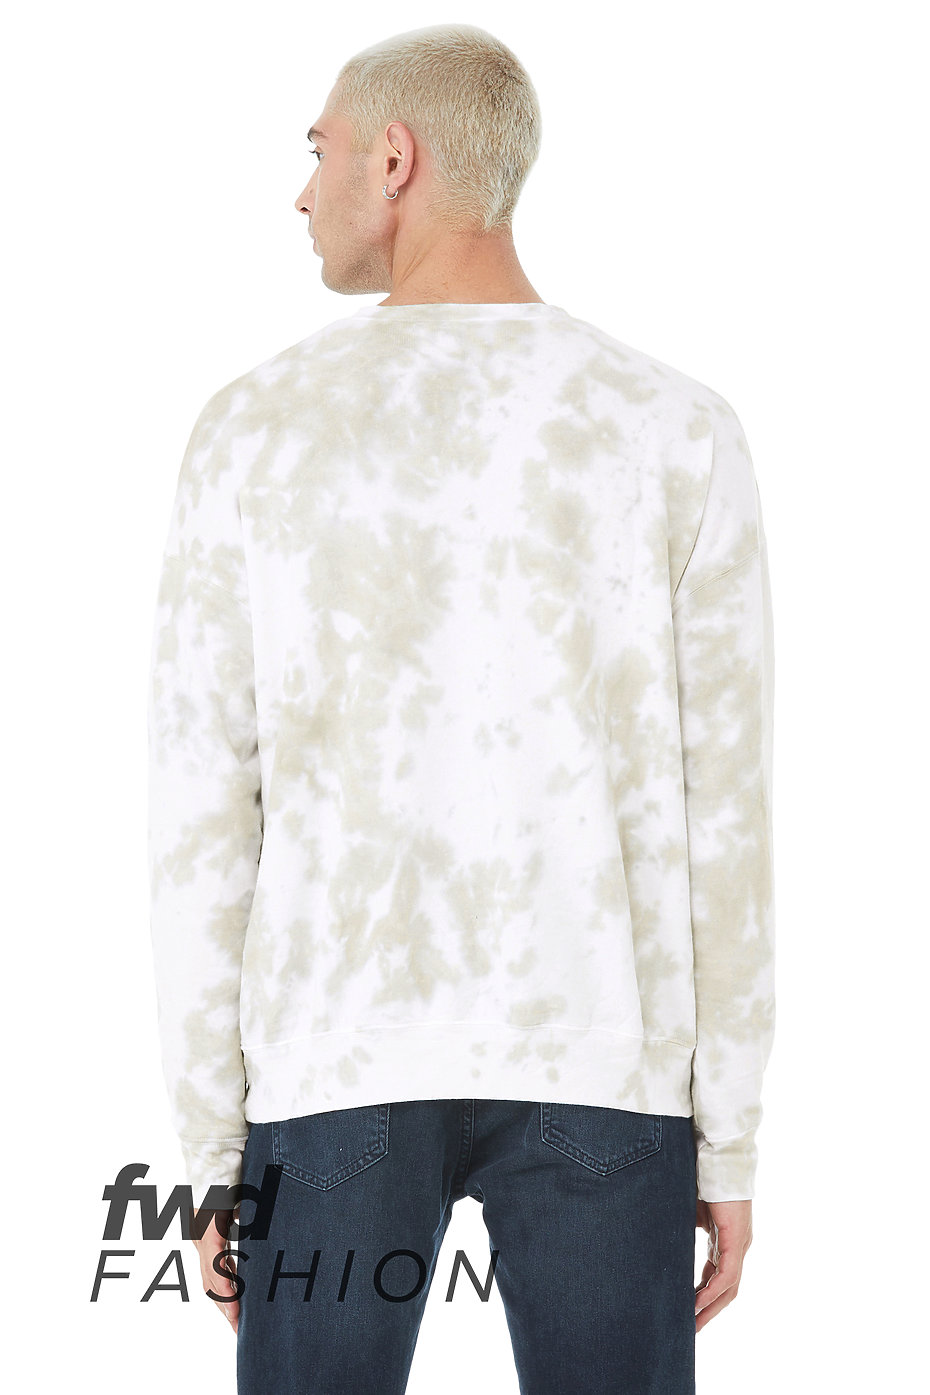 Unisex Tie-Dye Pullover Sweatshirt | BELLA+CANVAS ®